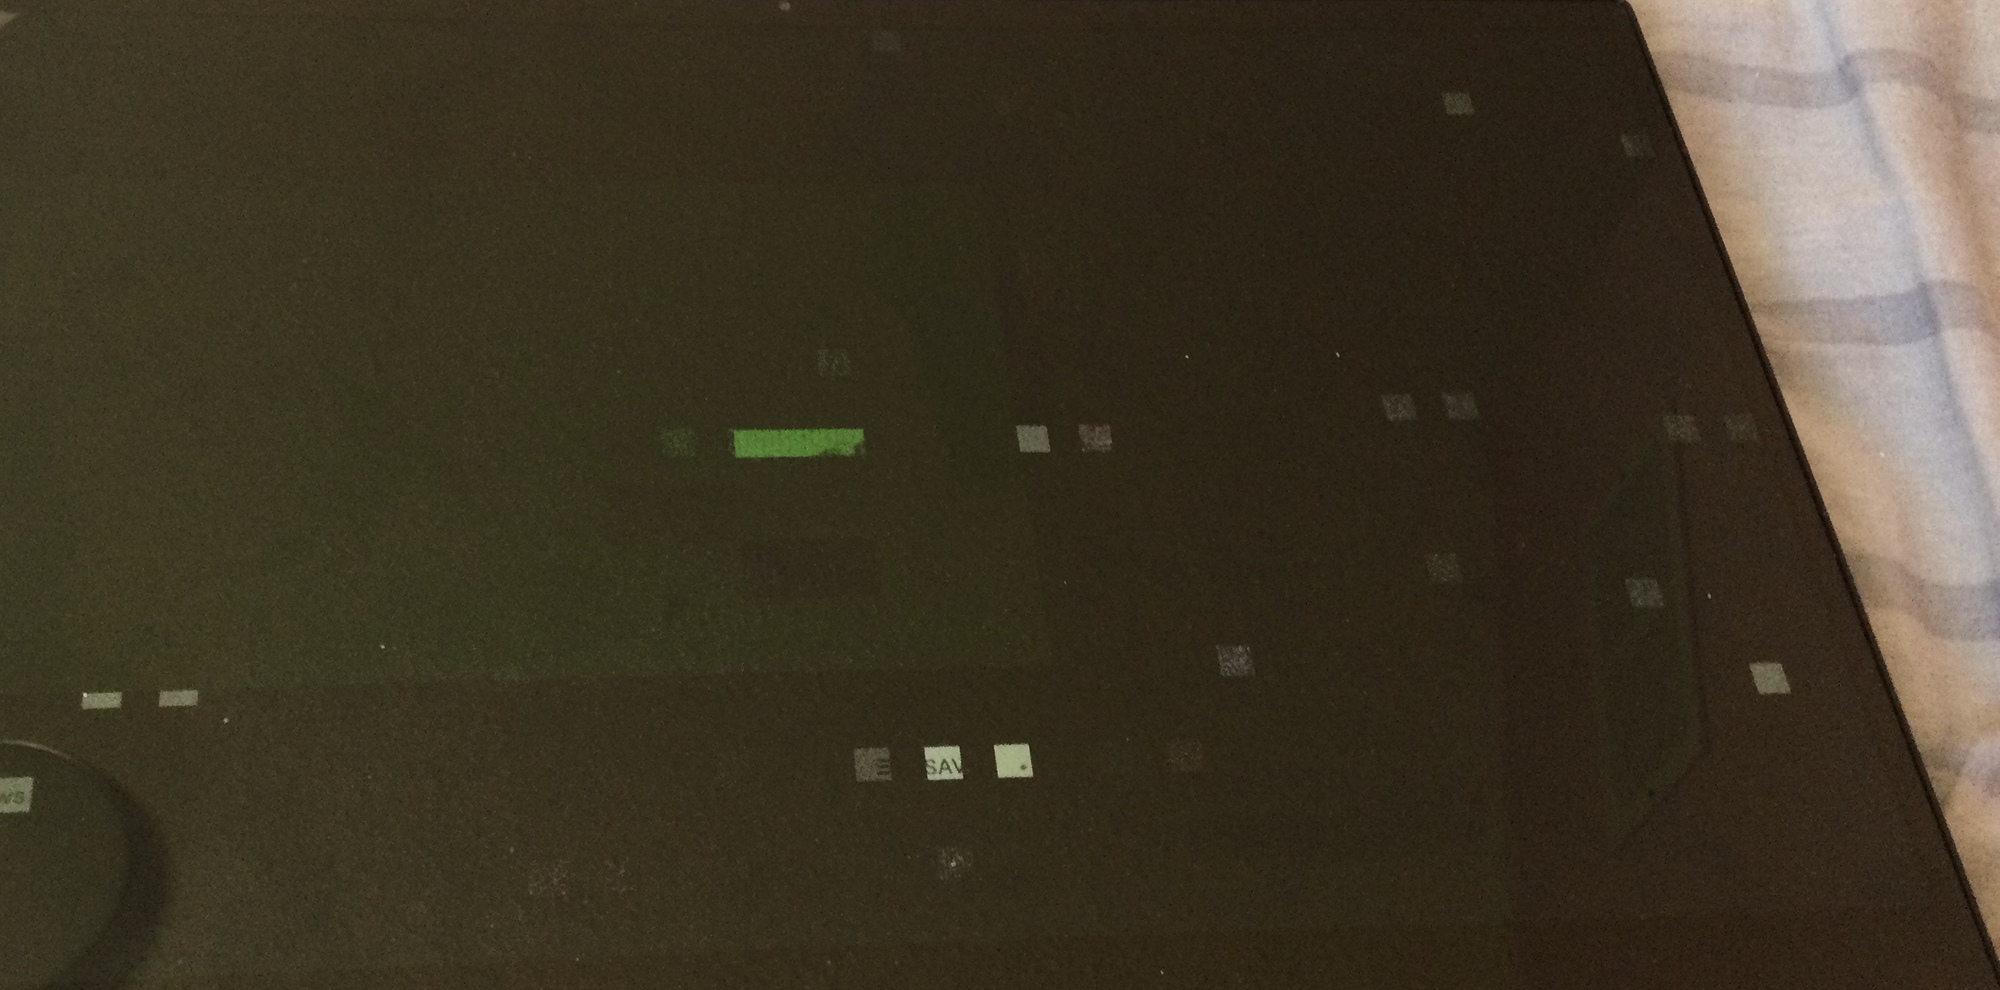 Black screen with square flashing lights. 26fb3f45-ca33-4ace-83b7-e3cf0b25ea1c?upload=true.jpg